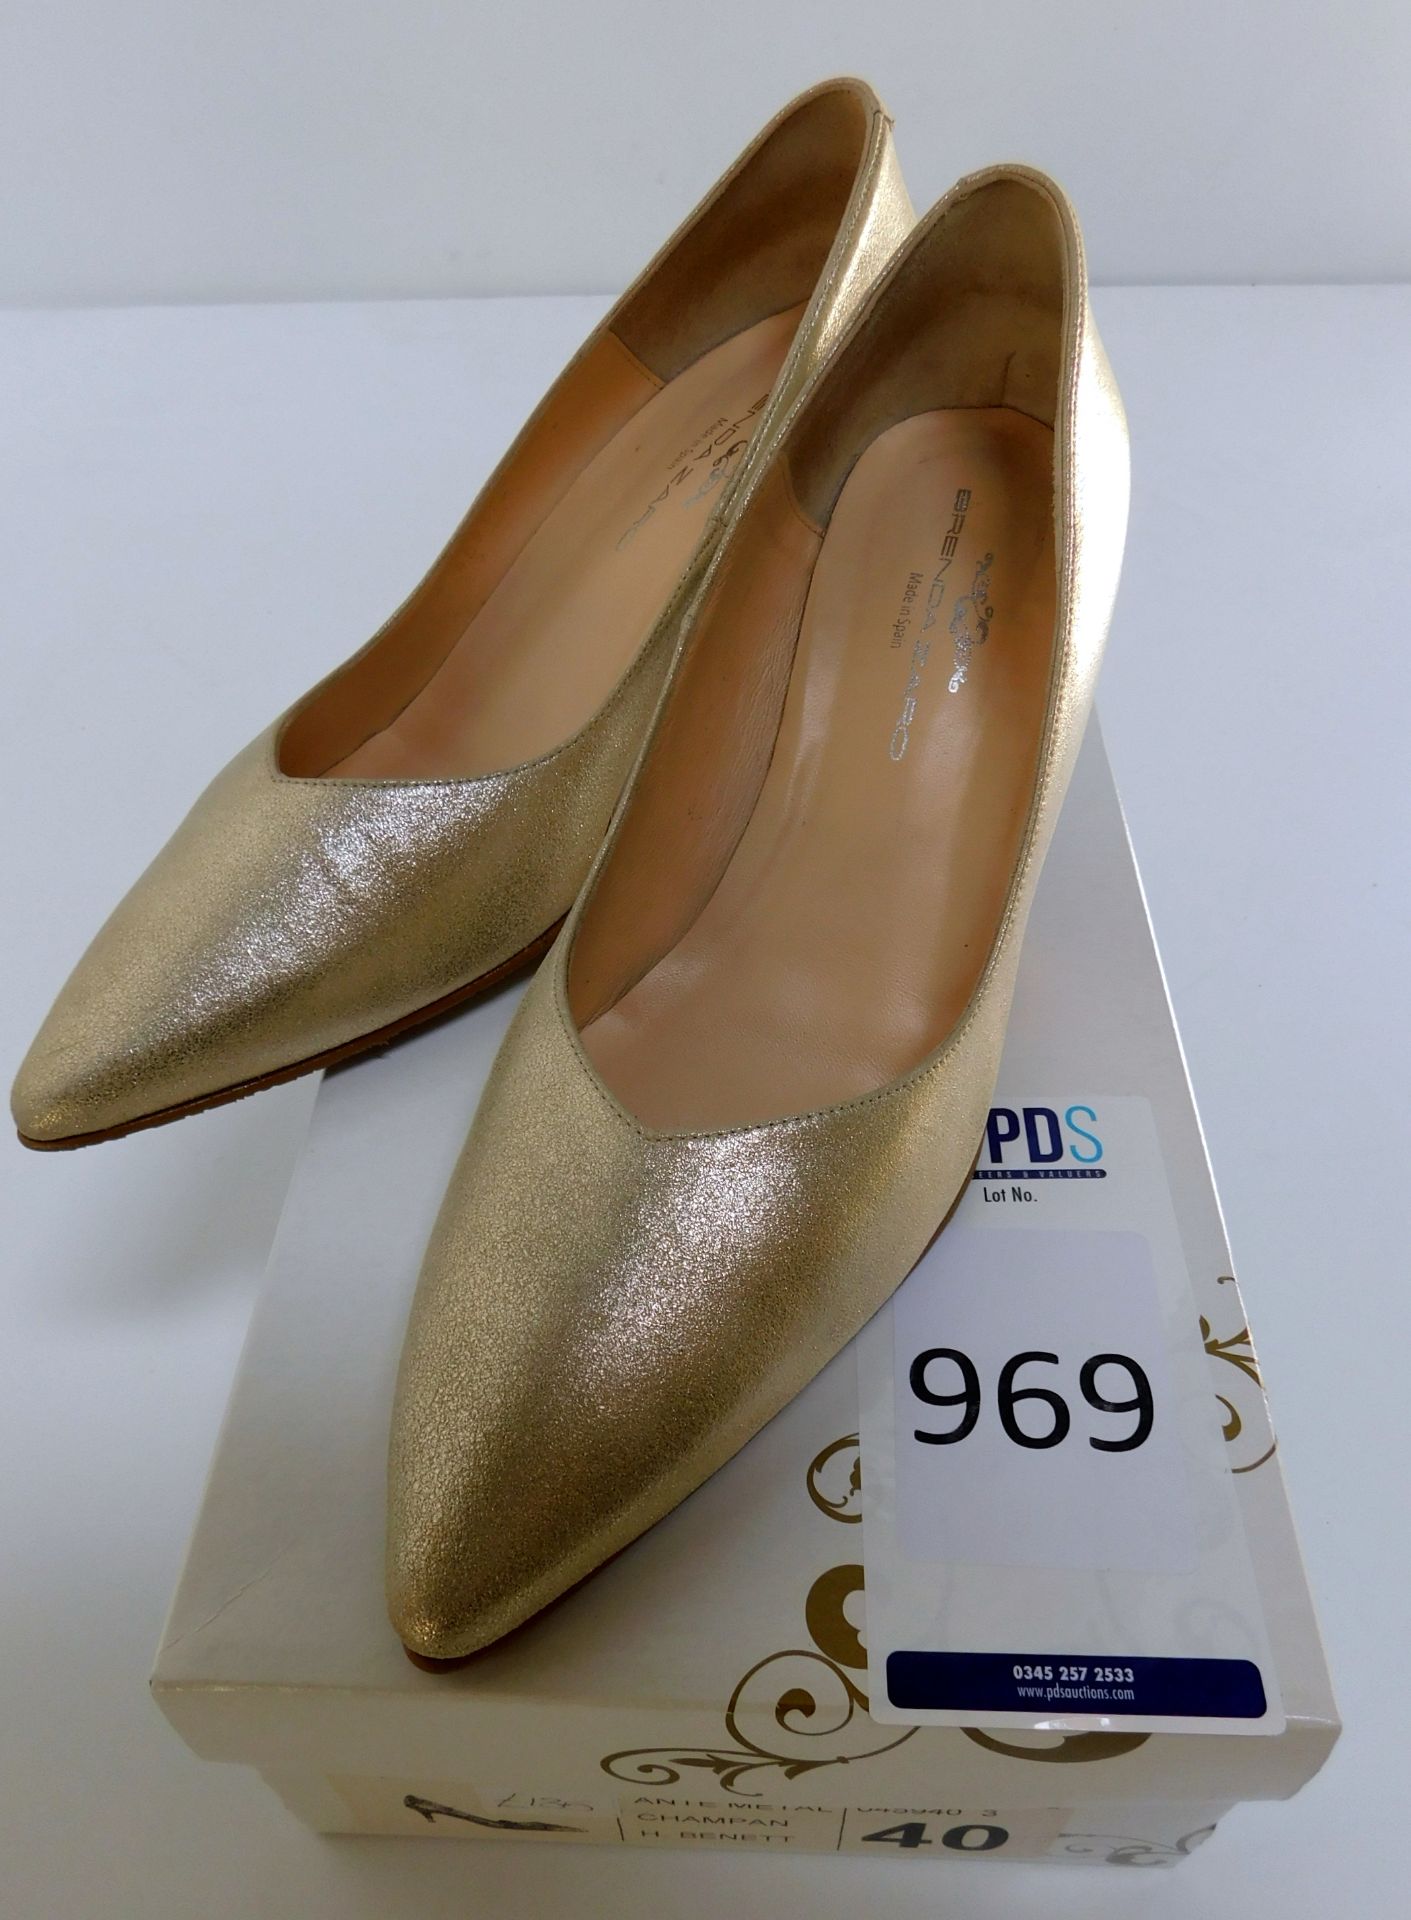 Brenda Zaro H. Bennet Women’s Heels, Model: T1070E, Style: 045940/3, Shade: Metallic Glitter and